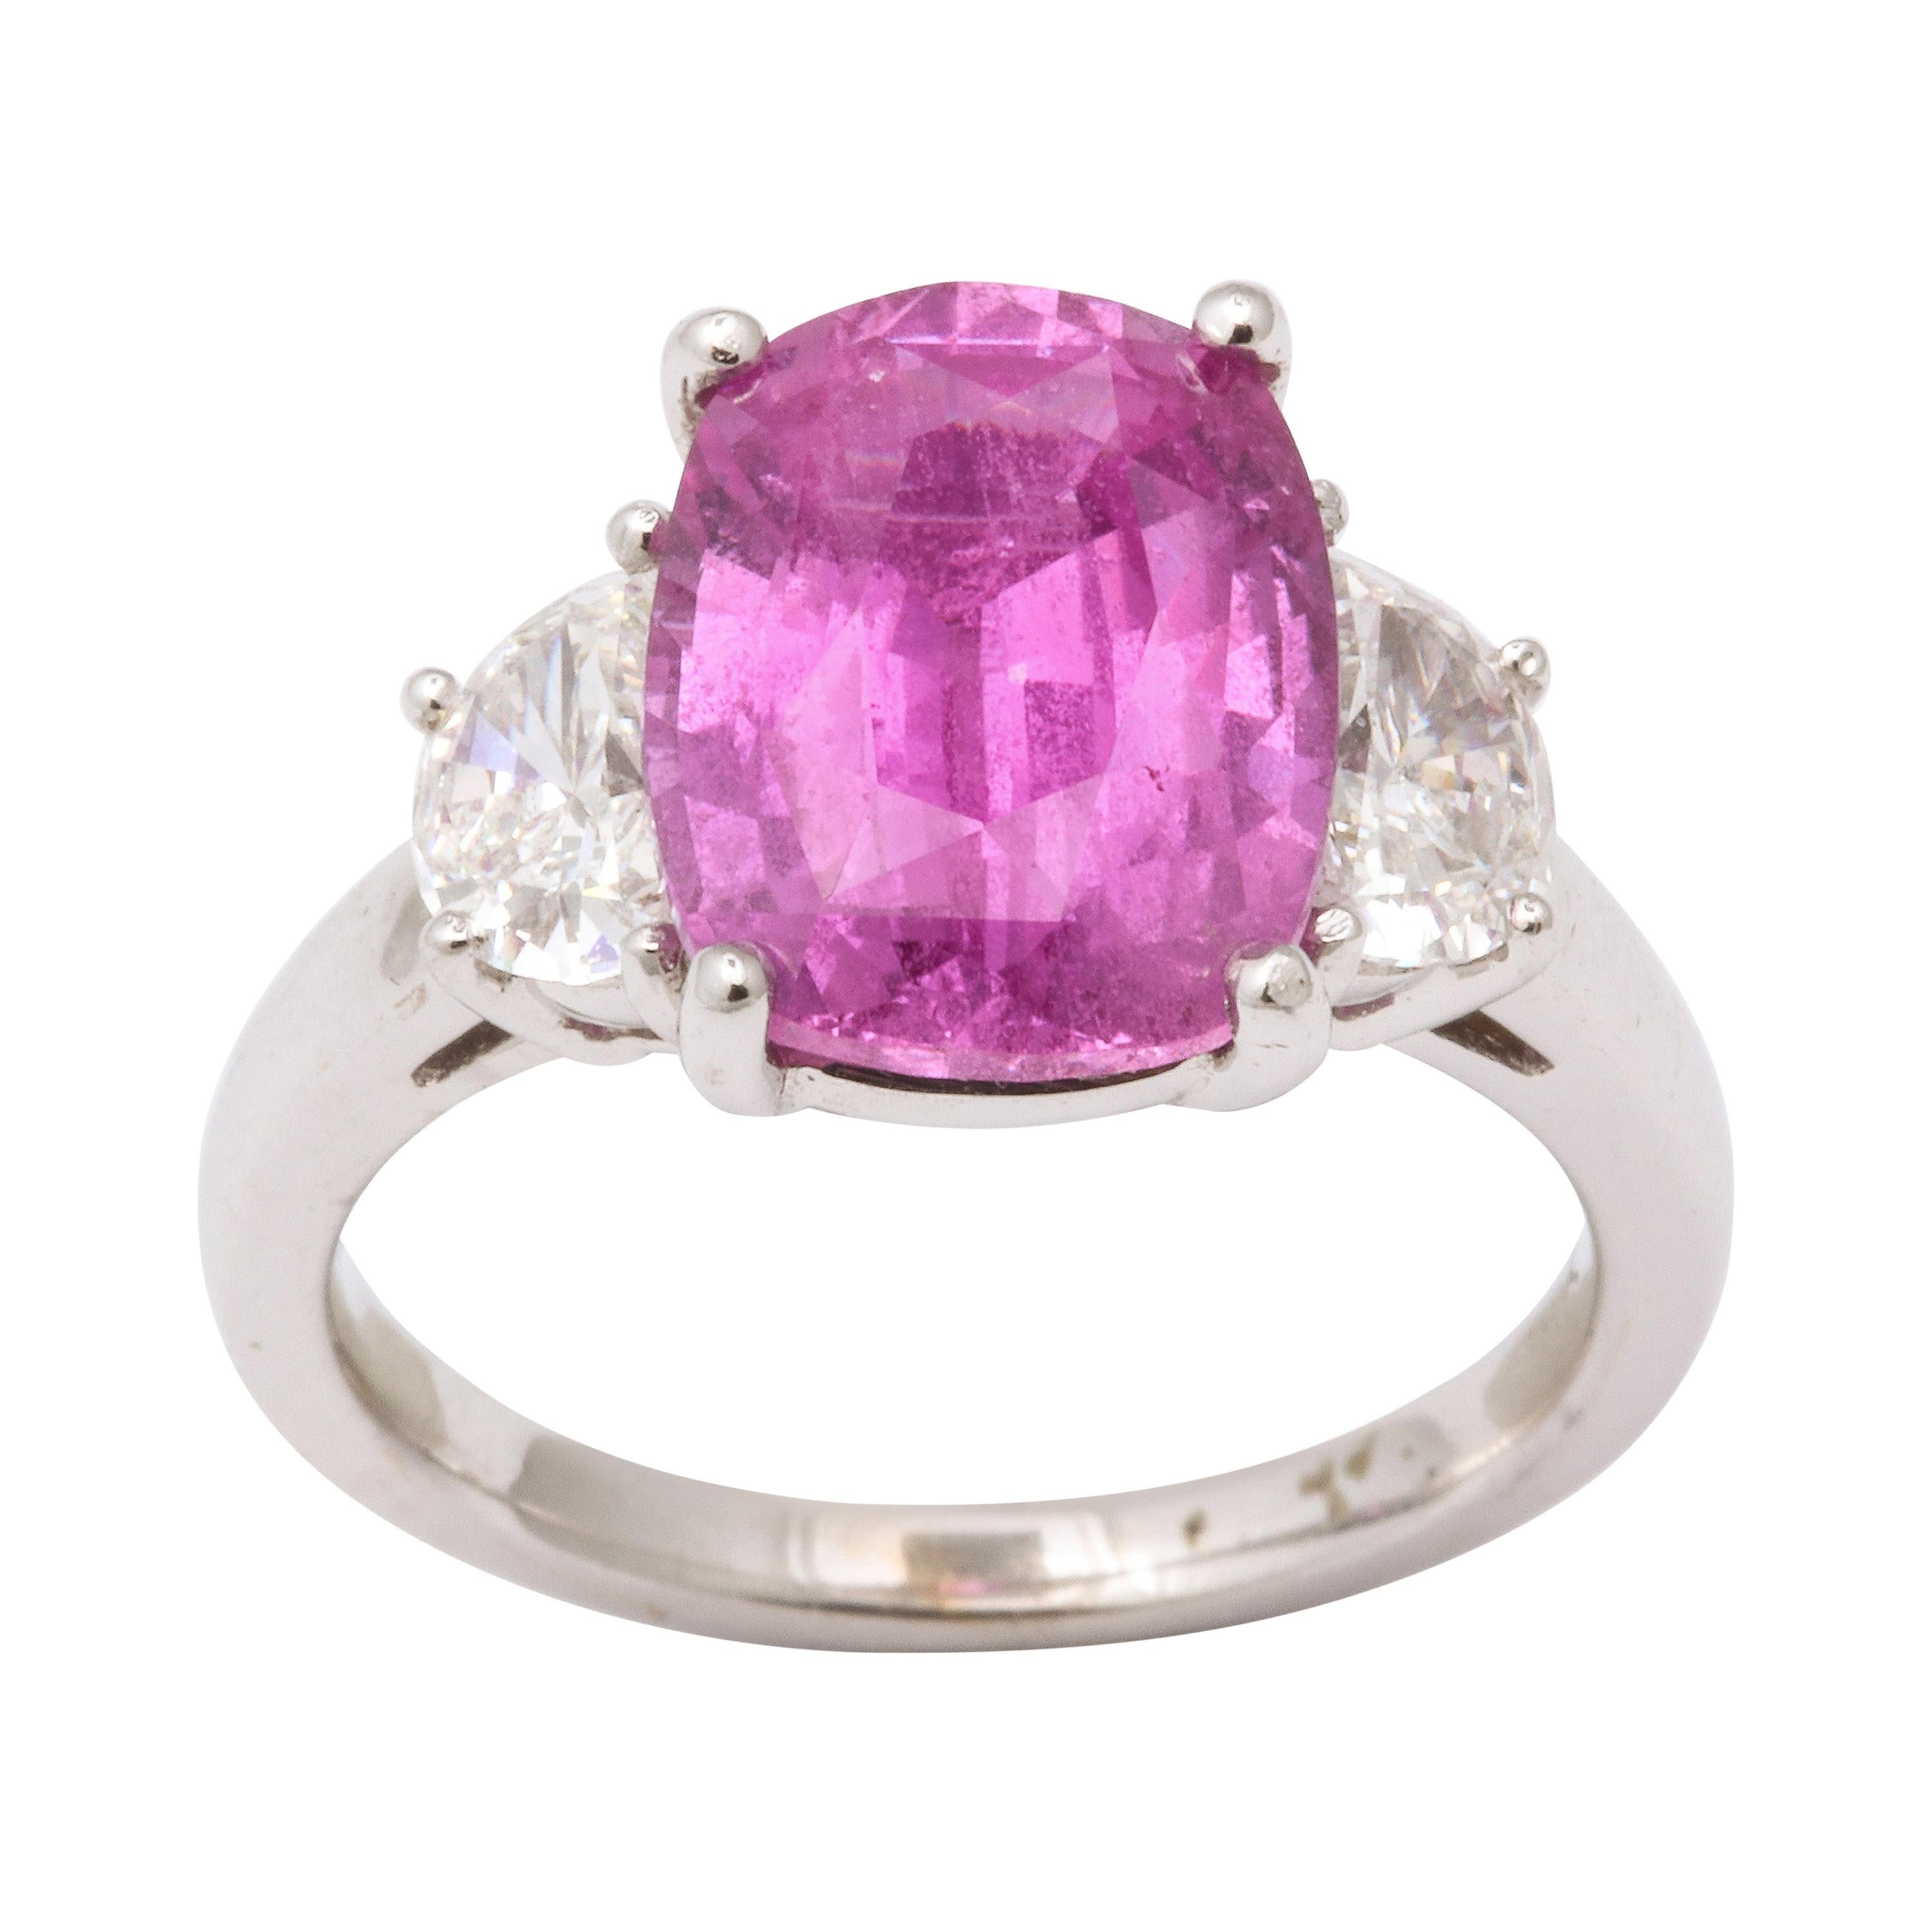 5 Carat Pink Sapphire and Diamond Ring